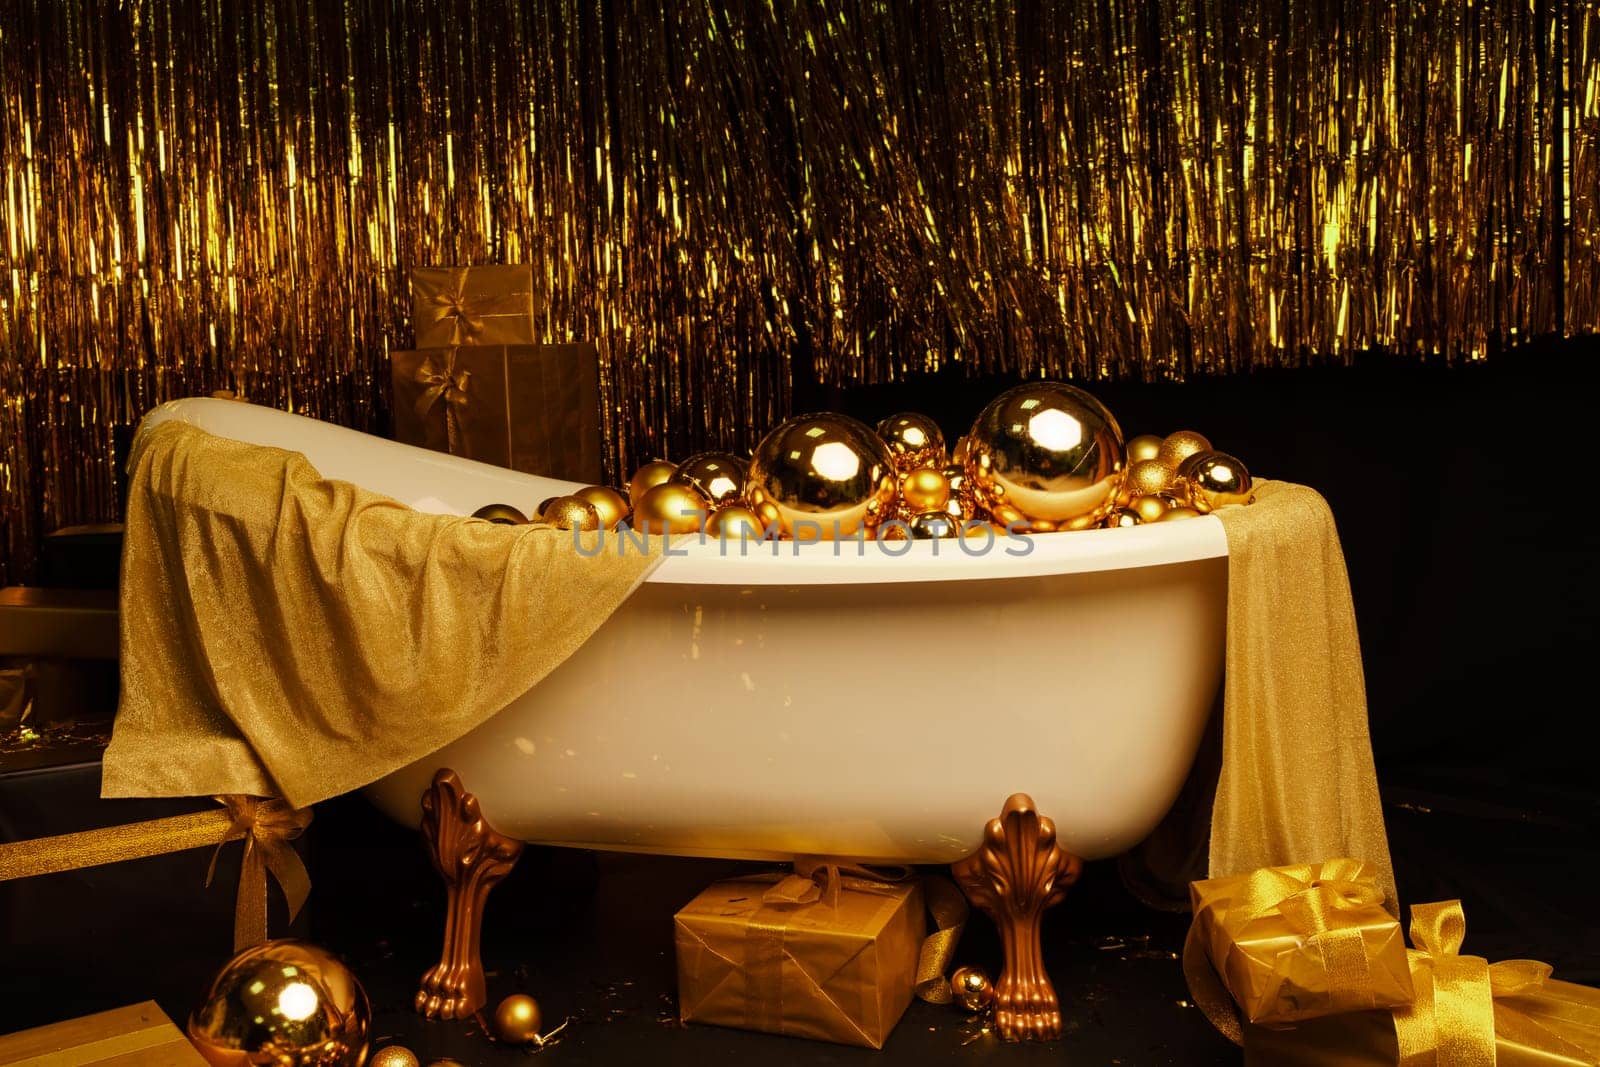 Bathtub full of golden balls. Vintage bright bathroom decorated with festive golden balls. New Year, Christmas bathroom interior. by Matiunina